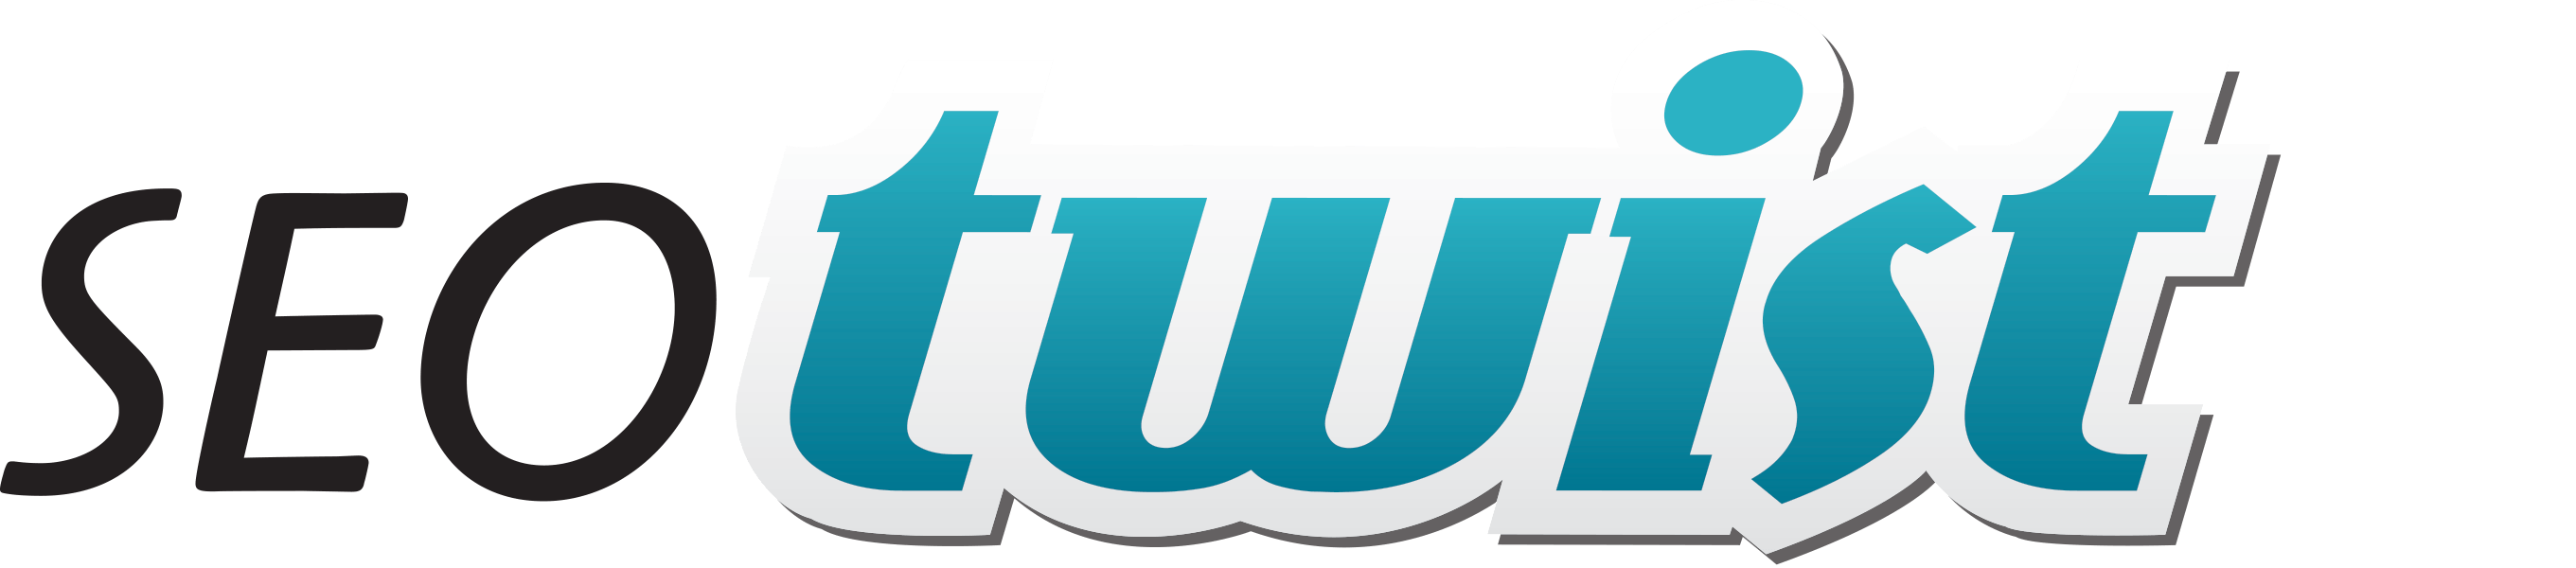 Twiist Logo - Ottawa SEO & PPC - Digital Marketing Agency | SEO TWIST